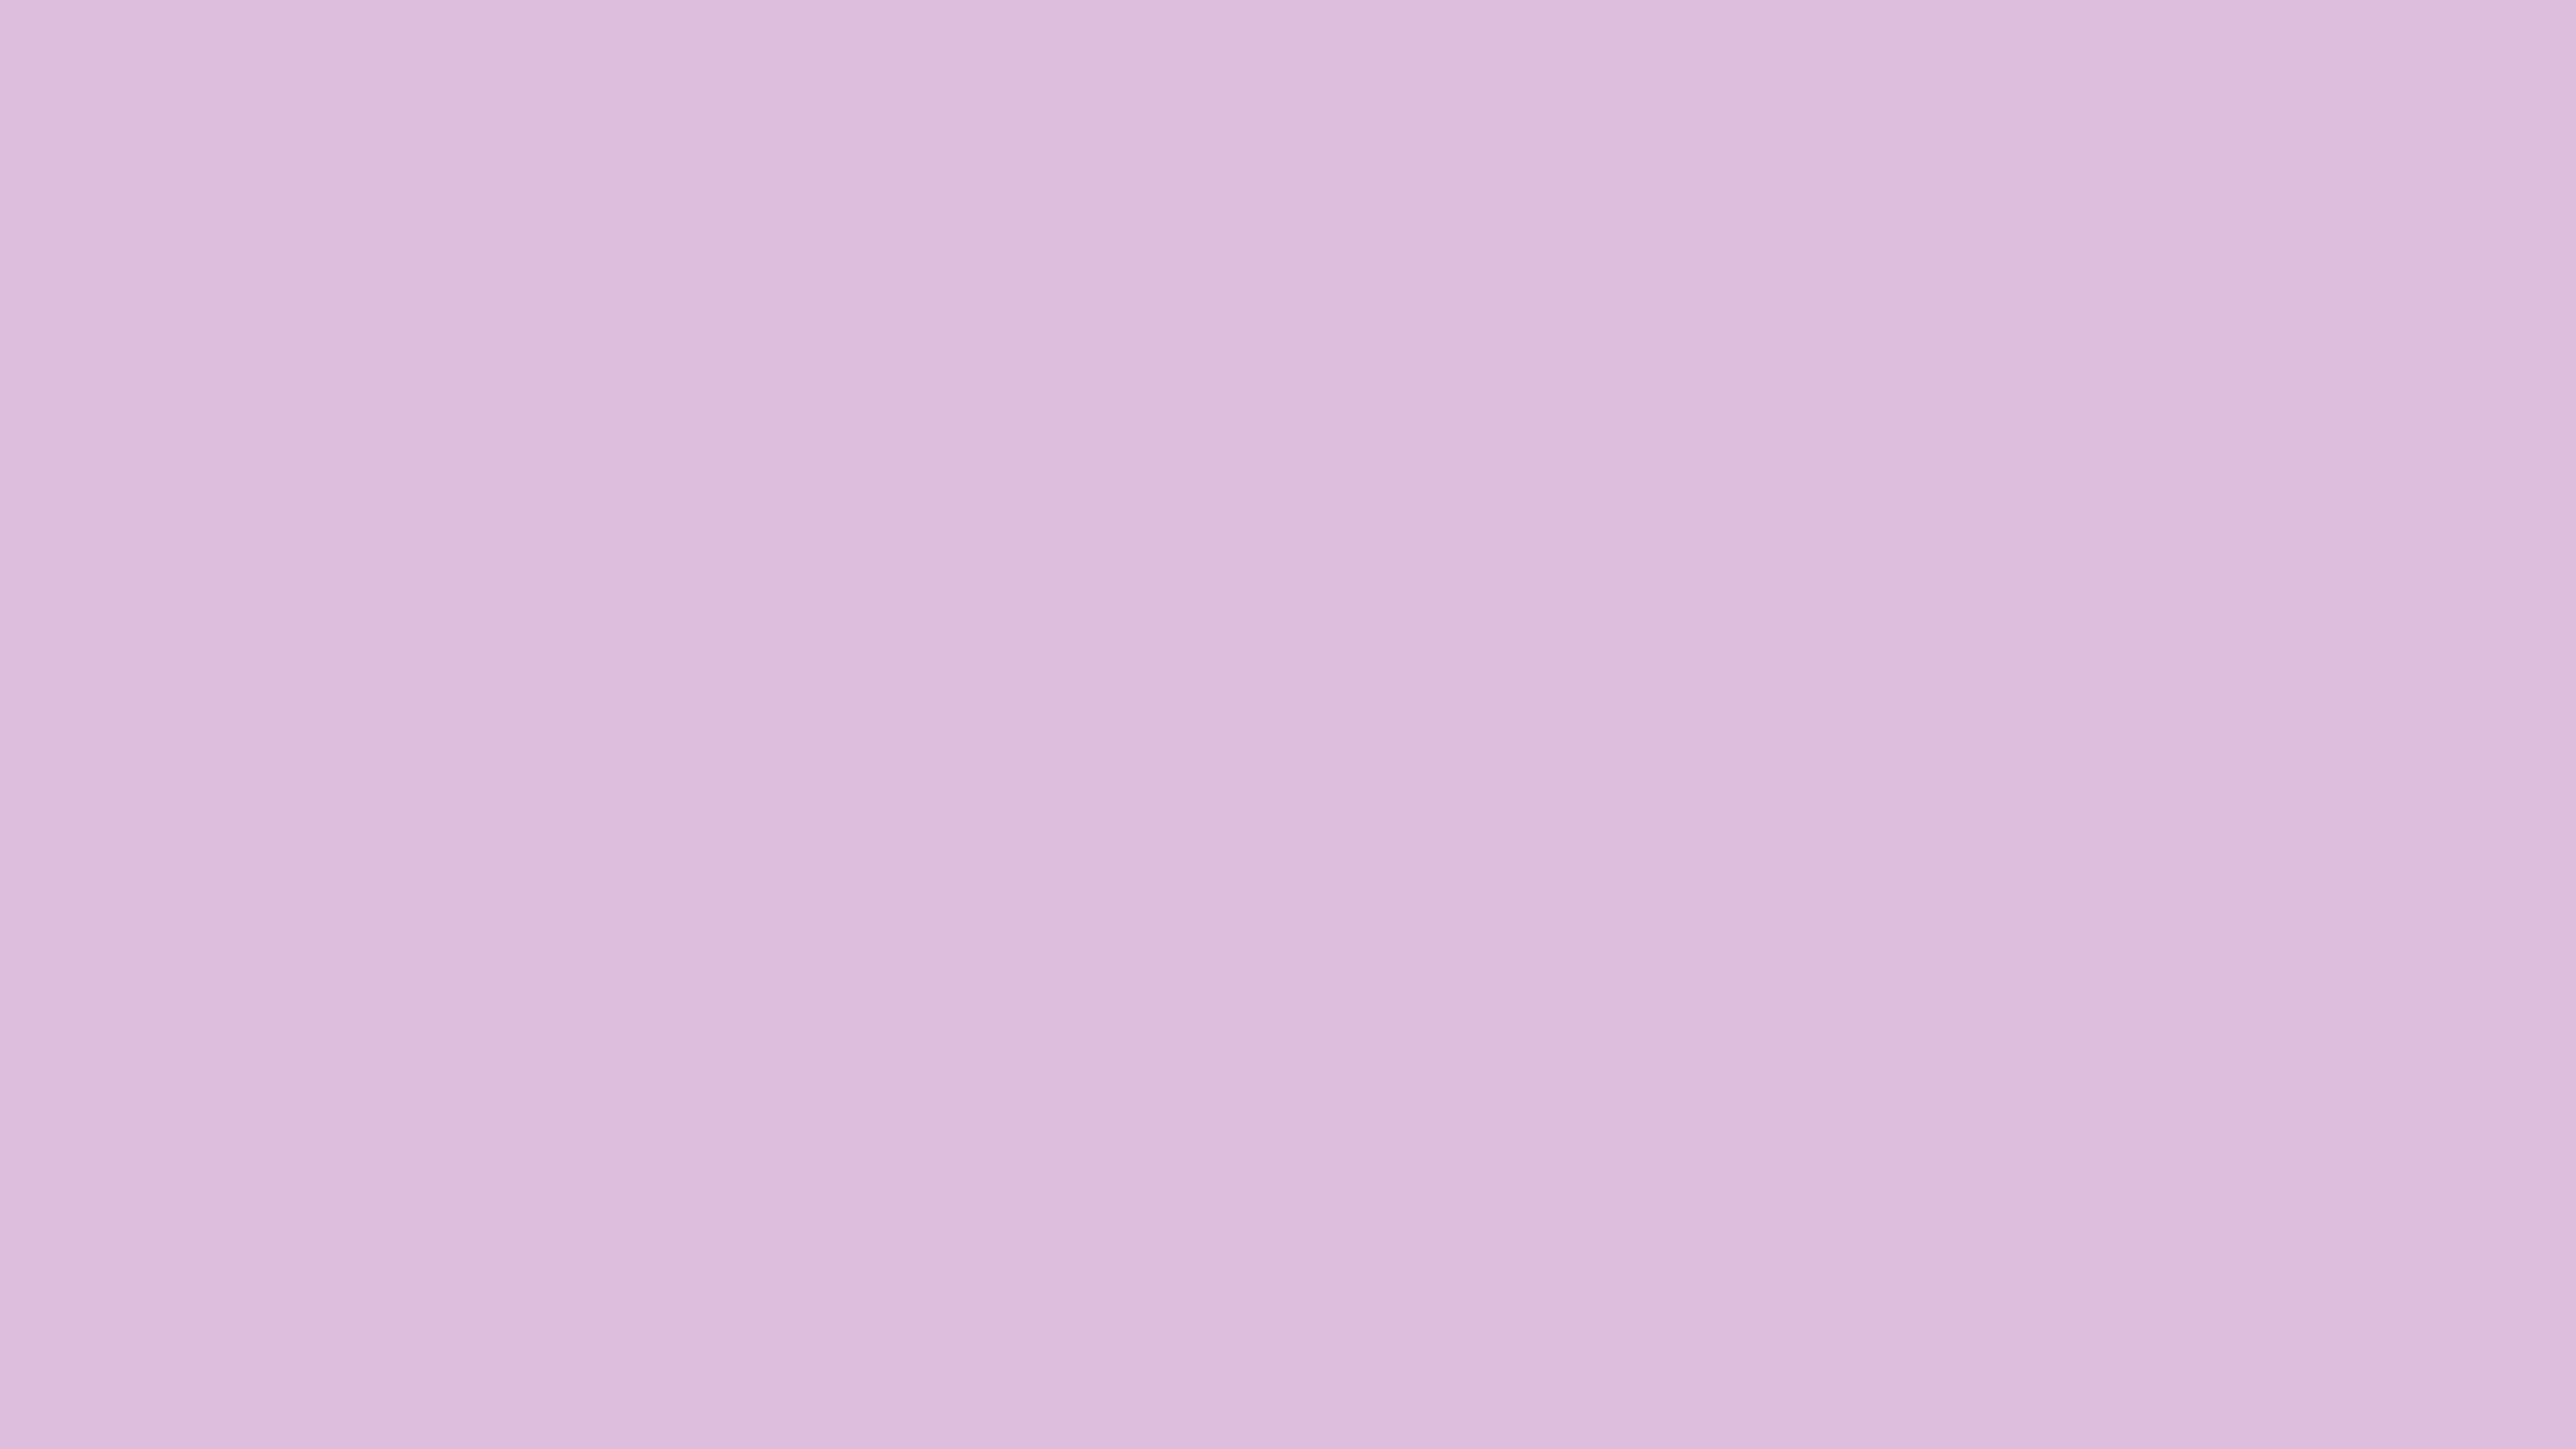 Faded Violet Solid Color Background Image | Free Image Generator